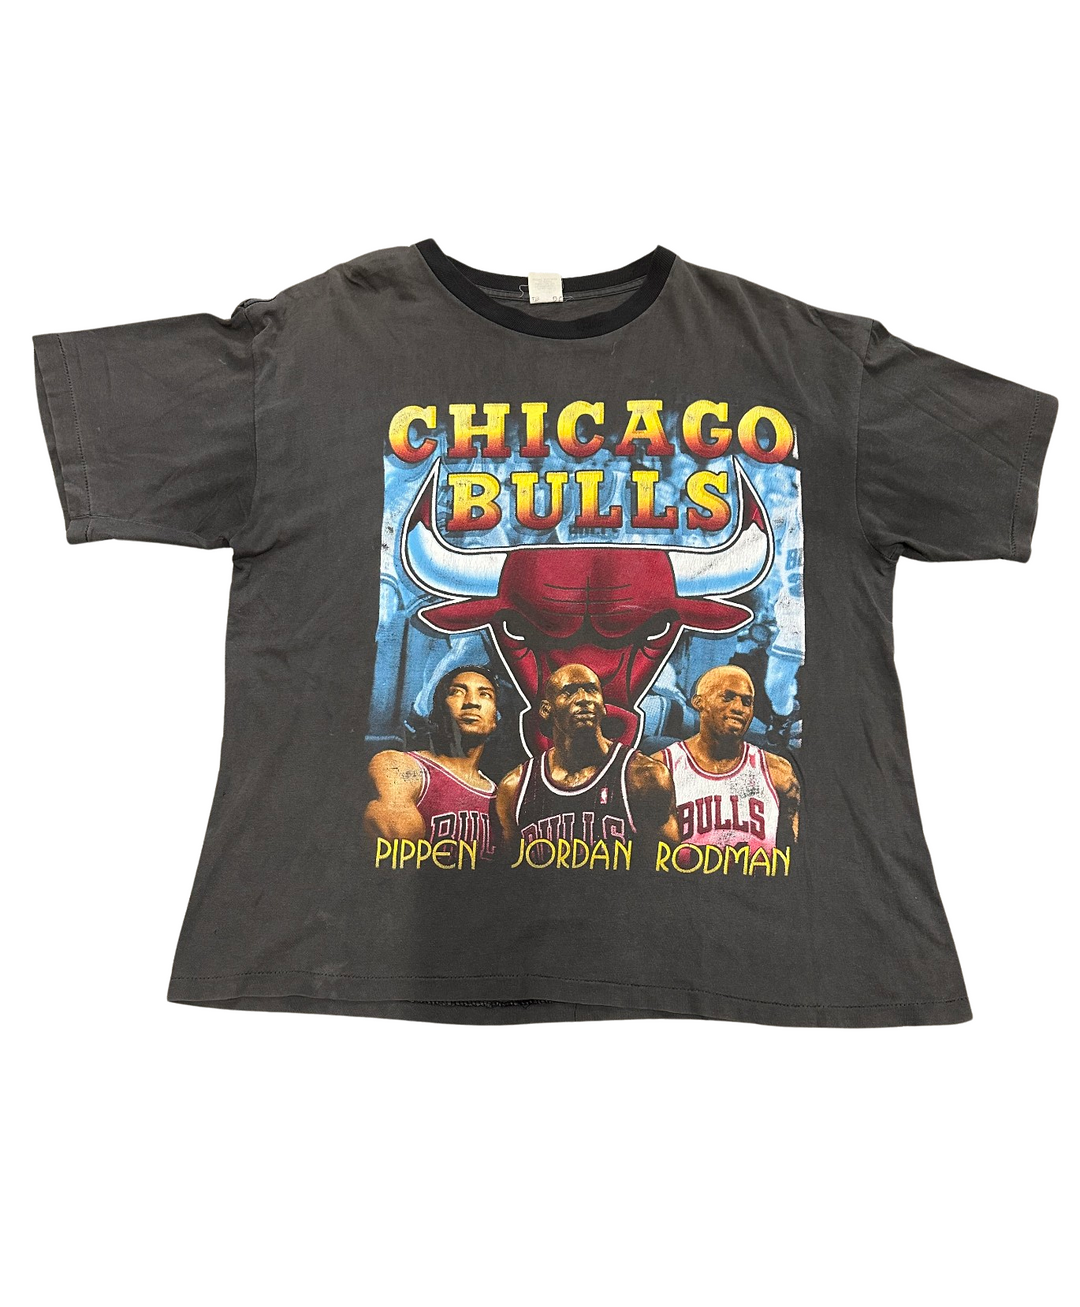 Chicago Bulls 'Big 3' 1996 Champions Vintage Tee